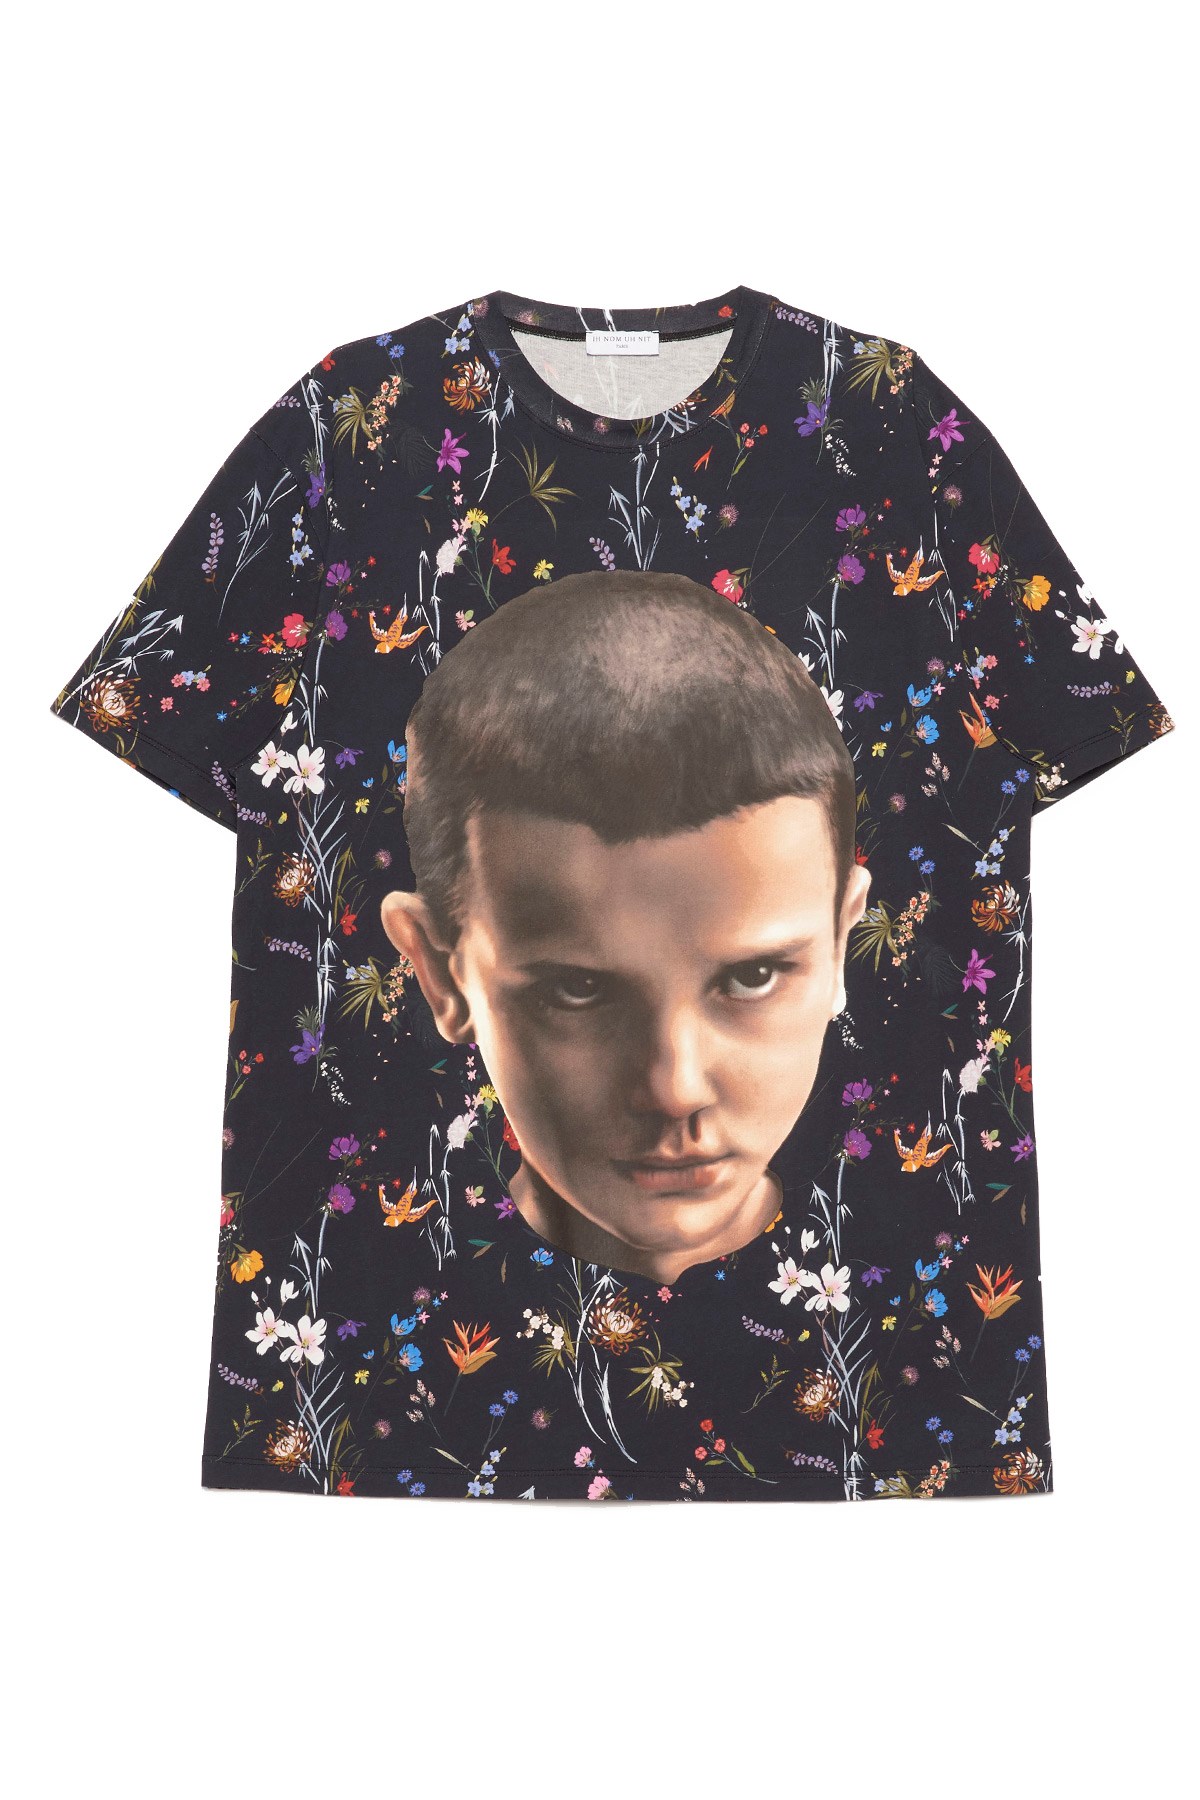 IH NOM UH NIT 'Eleven' T-Shirt